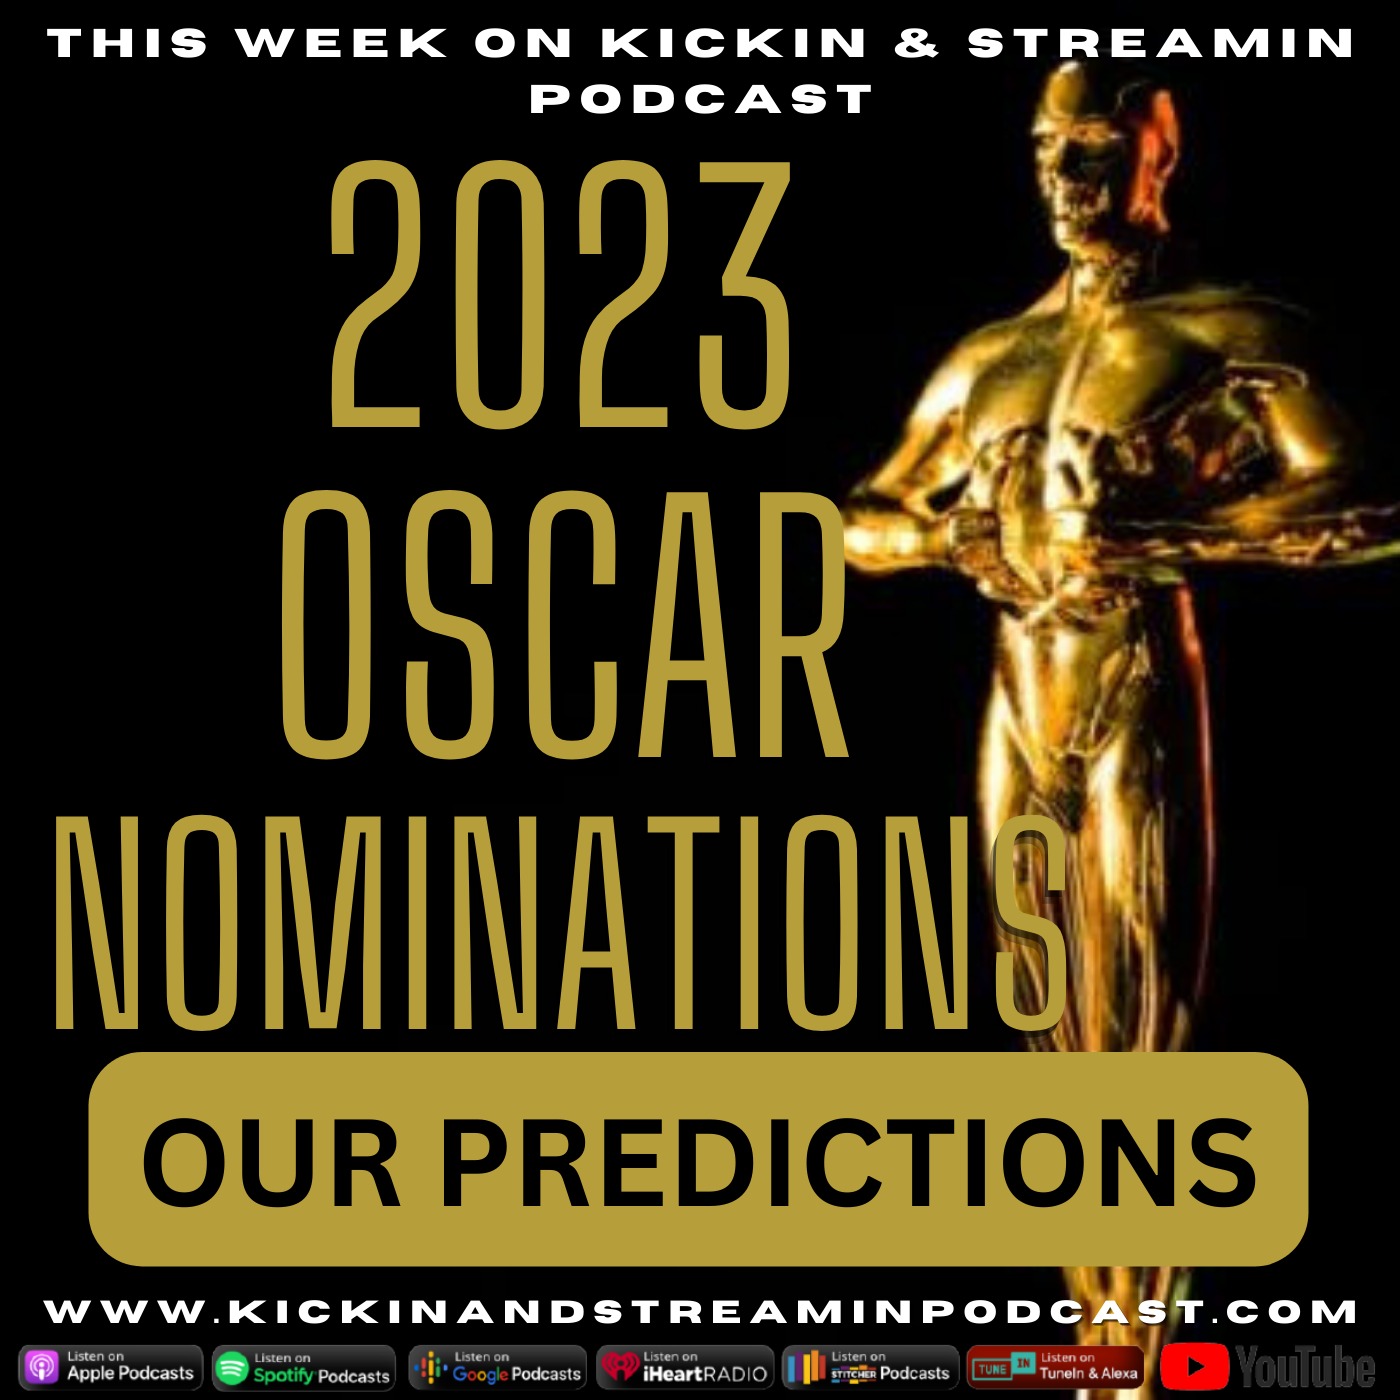 2023 Oscar Nominations: Our Predictions